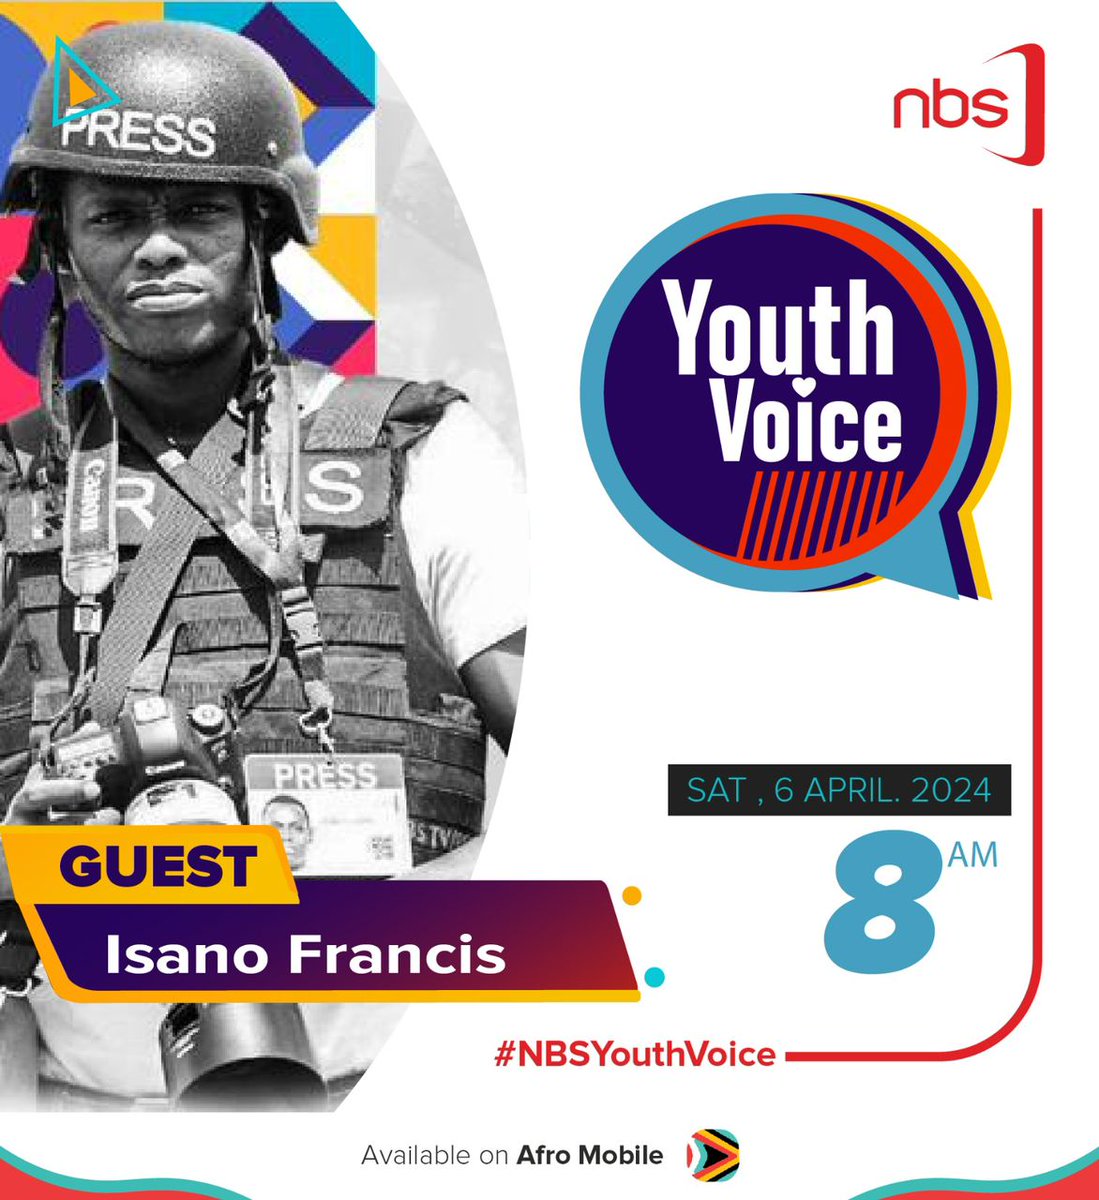 This Saturday morning @nbstv .. #NBSYouthVoice hosting @francis_isano